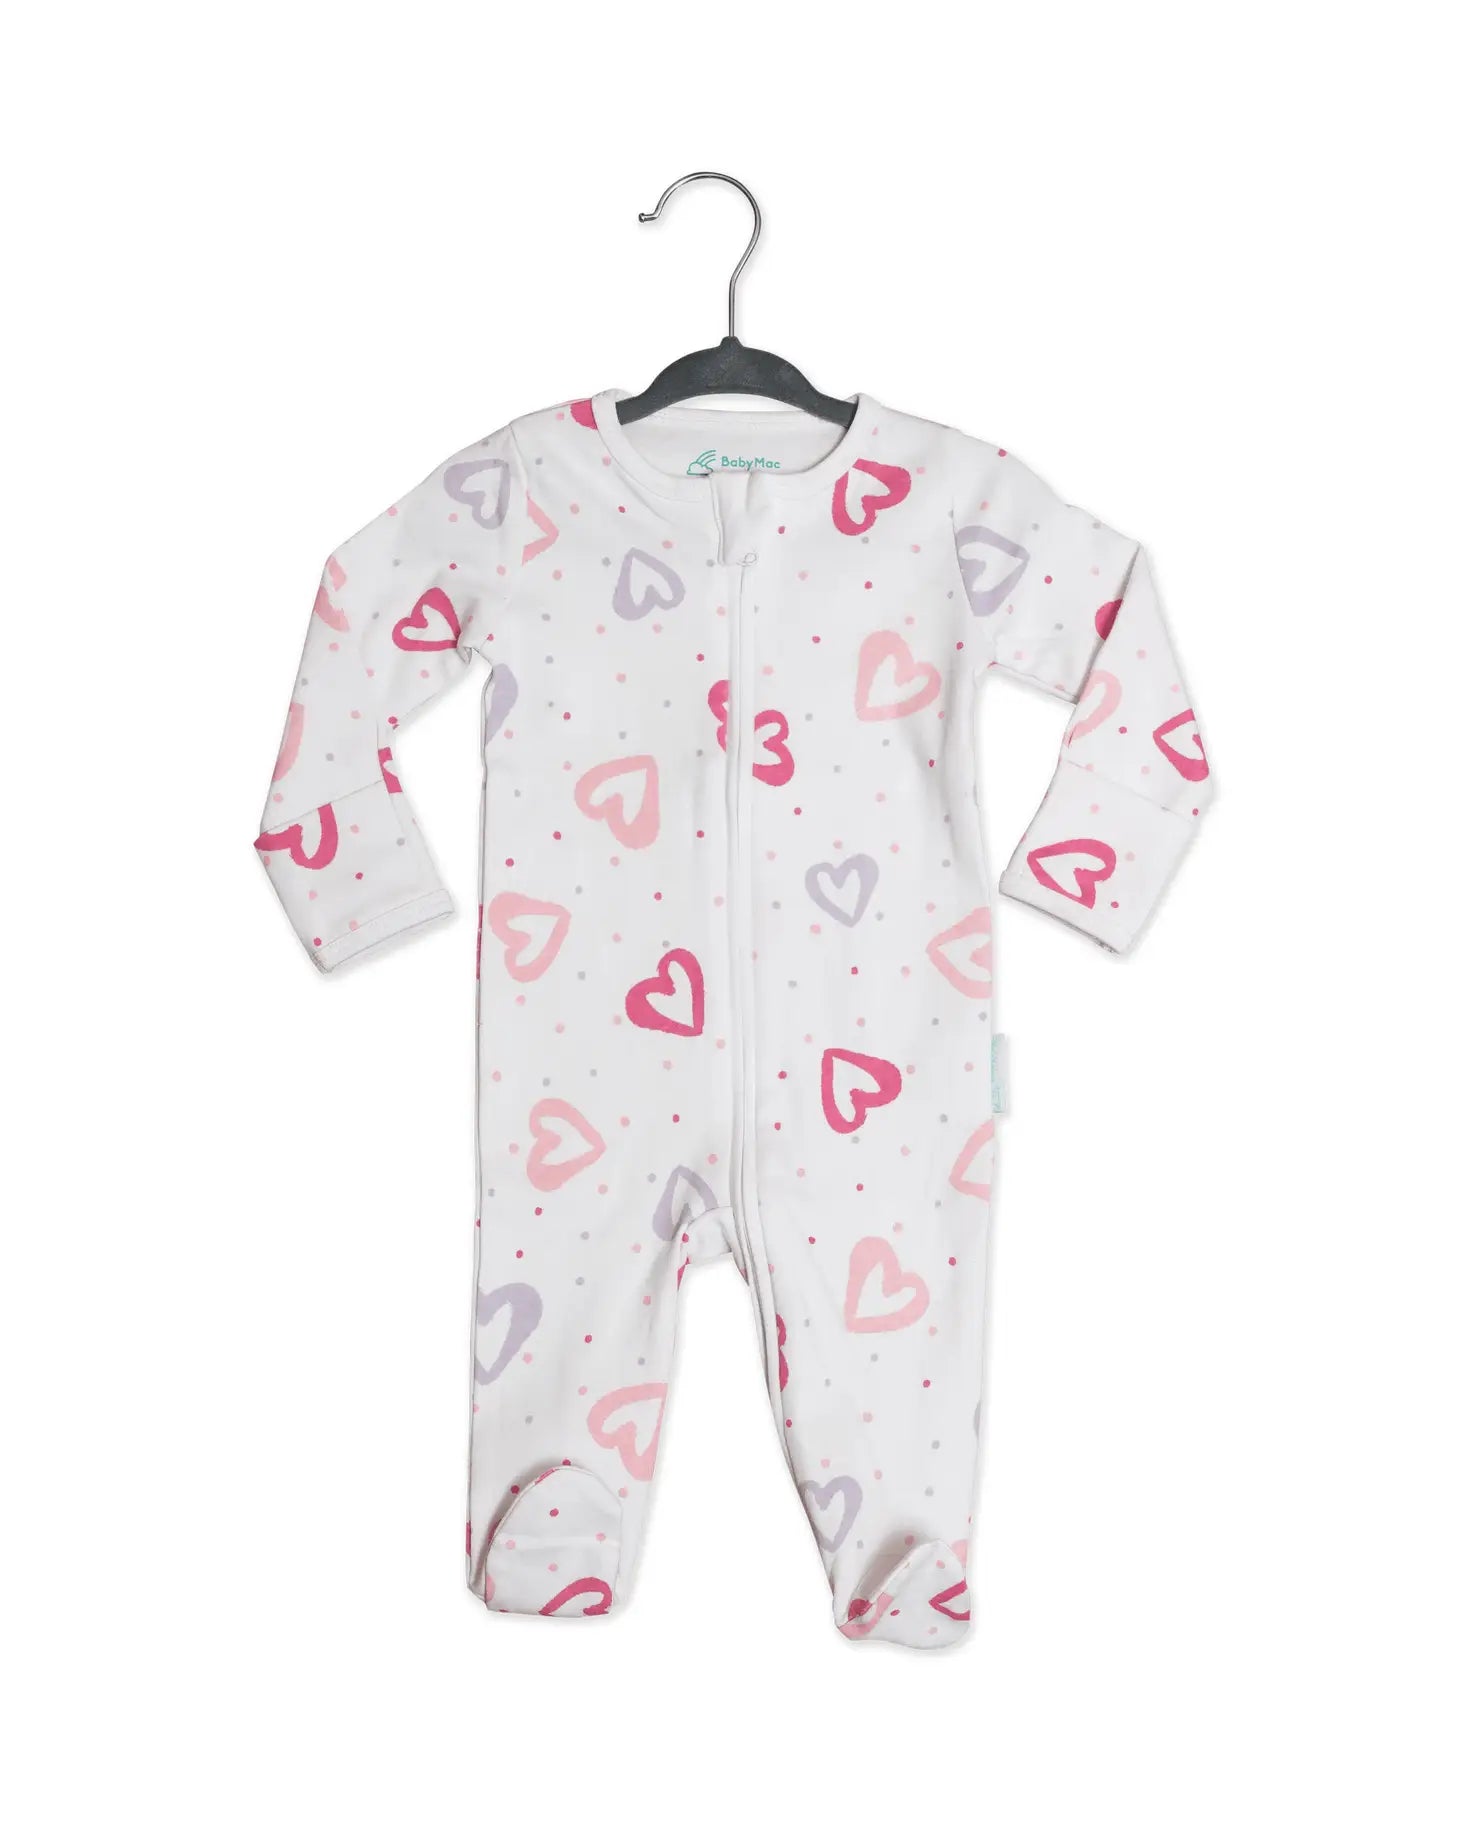 BabyMac Organic Cotton Sleepsuit Heart Print Design